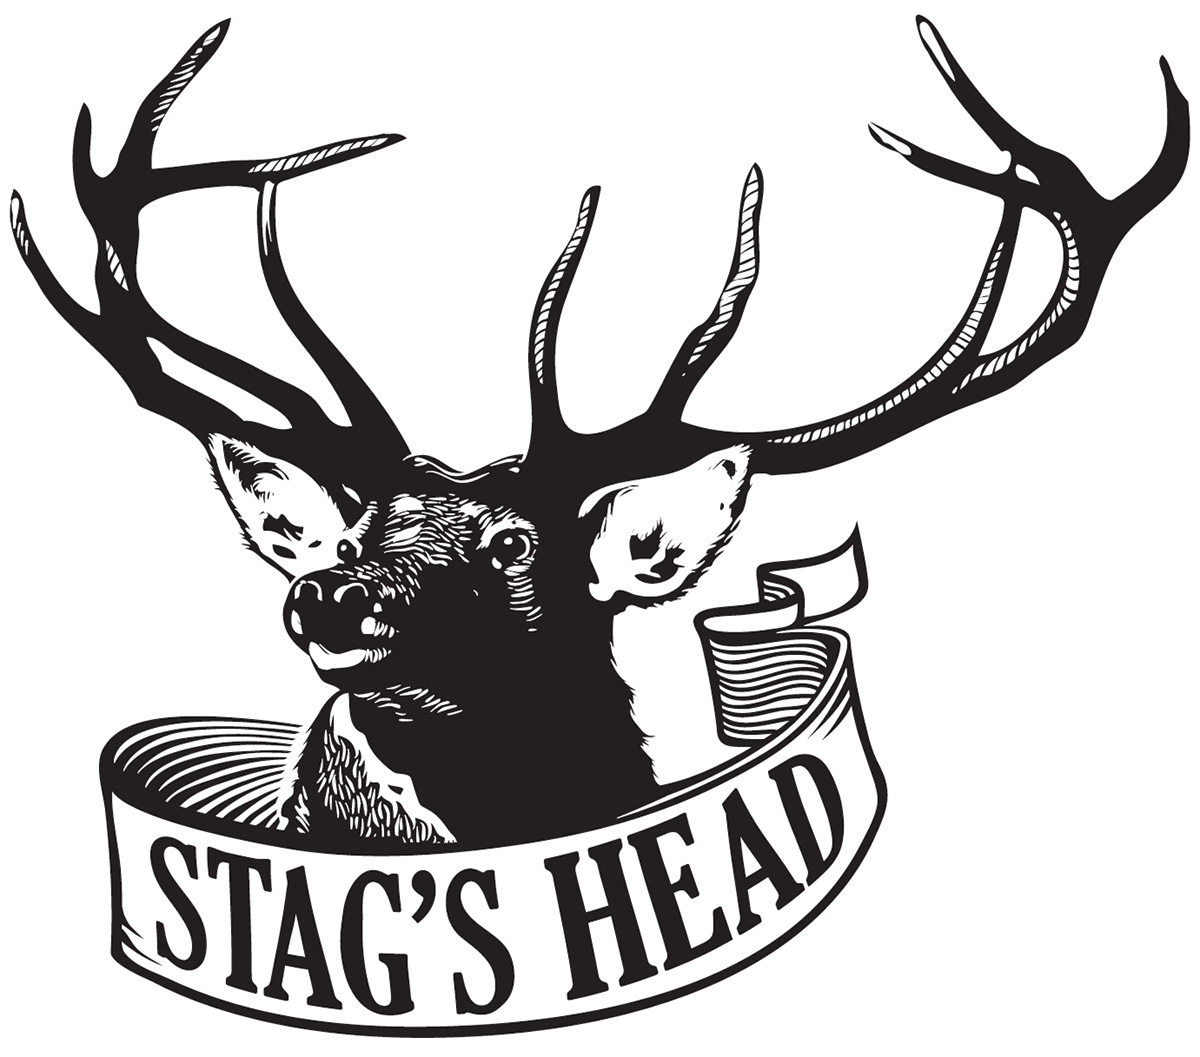 Stag's Head logo identity, illustration Graphic Design